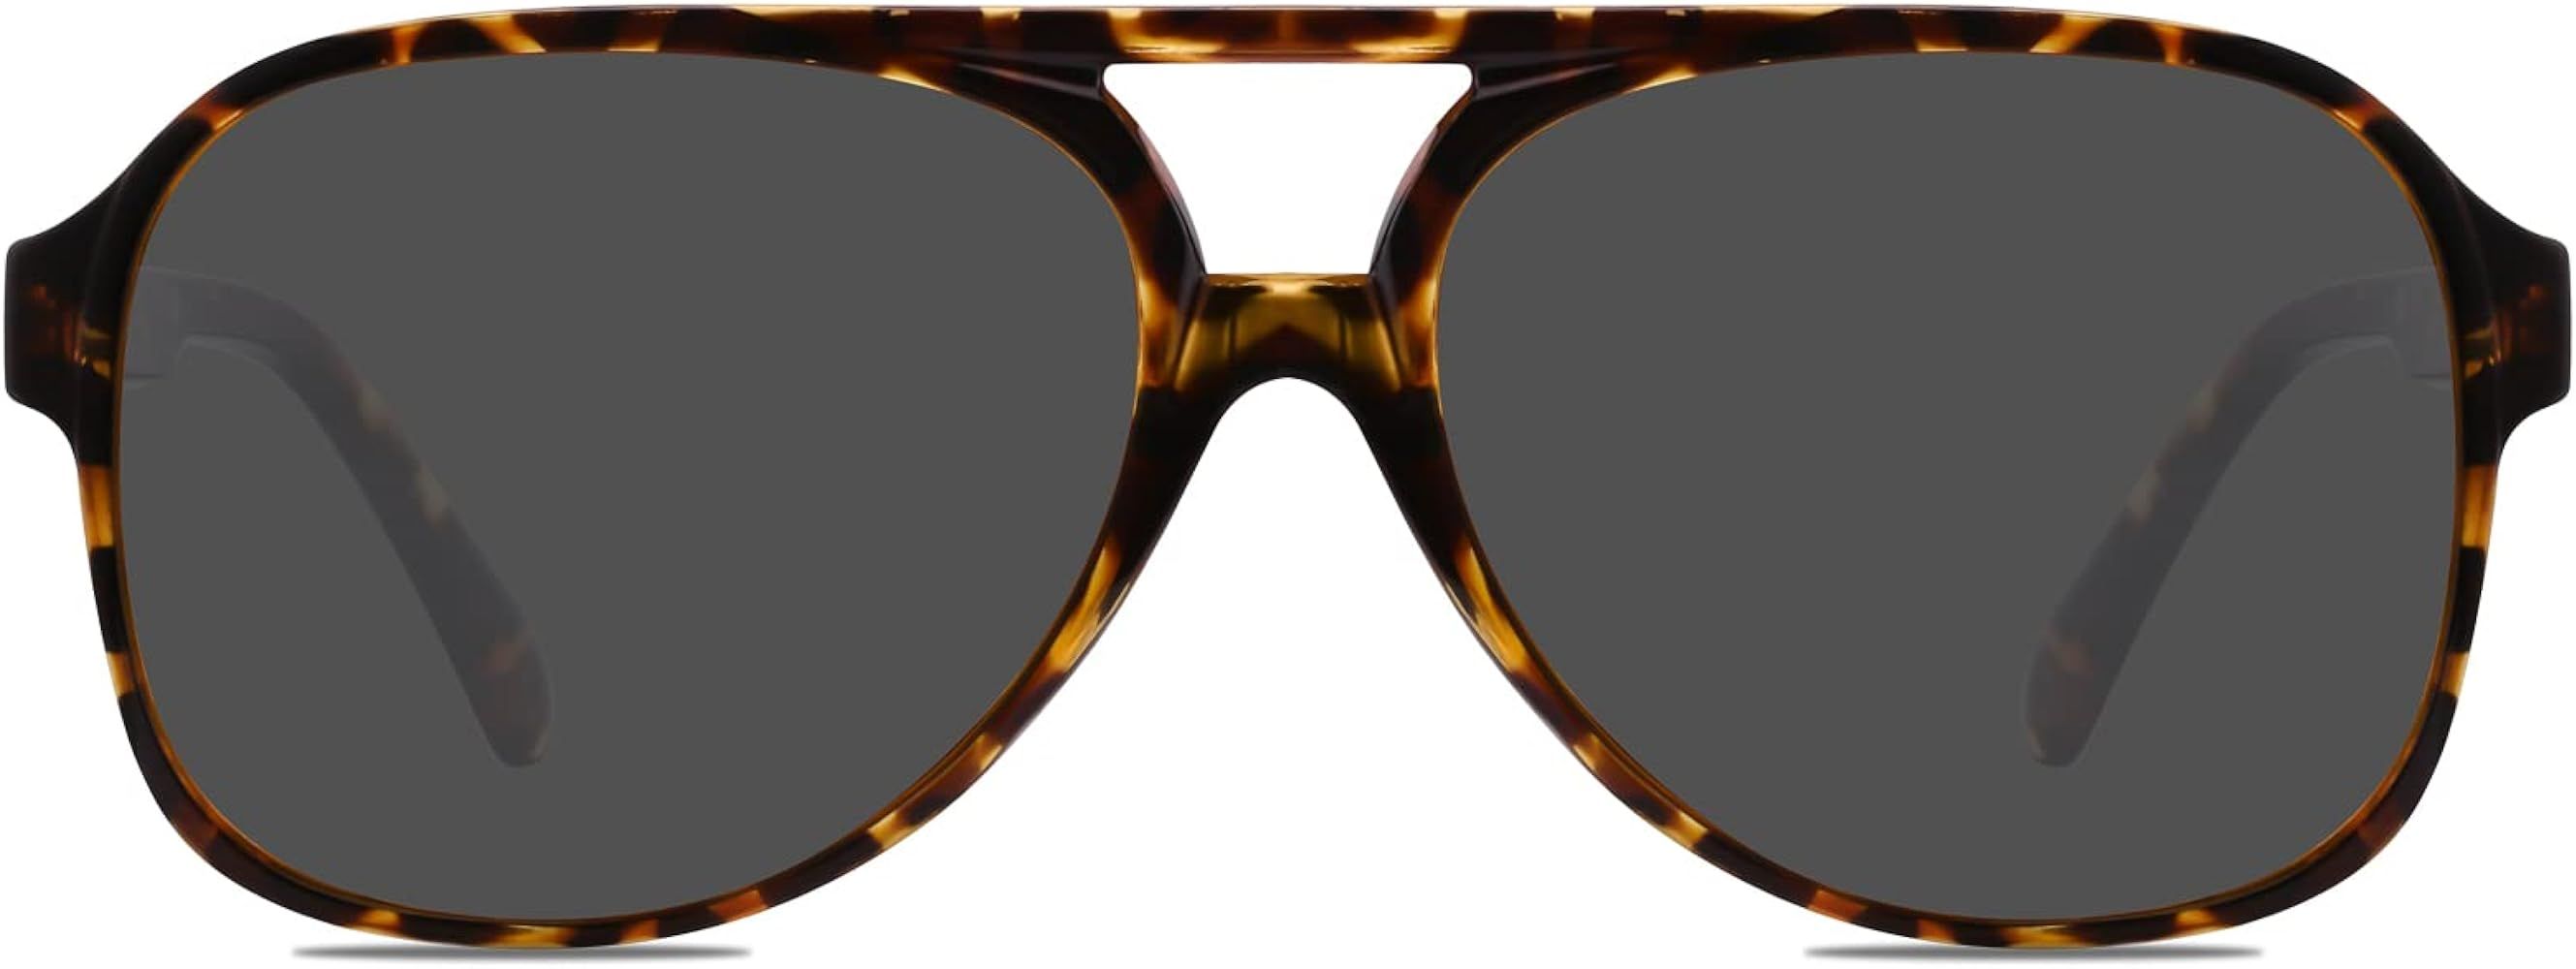 YDAOWKN Classic Vintage Aviator Sunglasses for Women Men Large Frame Retro 70s Sunglasses UV400 | Amazon (US)